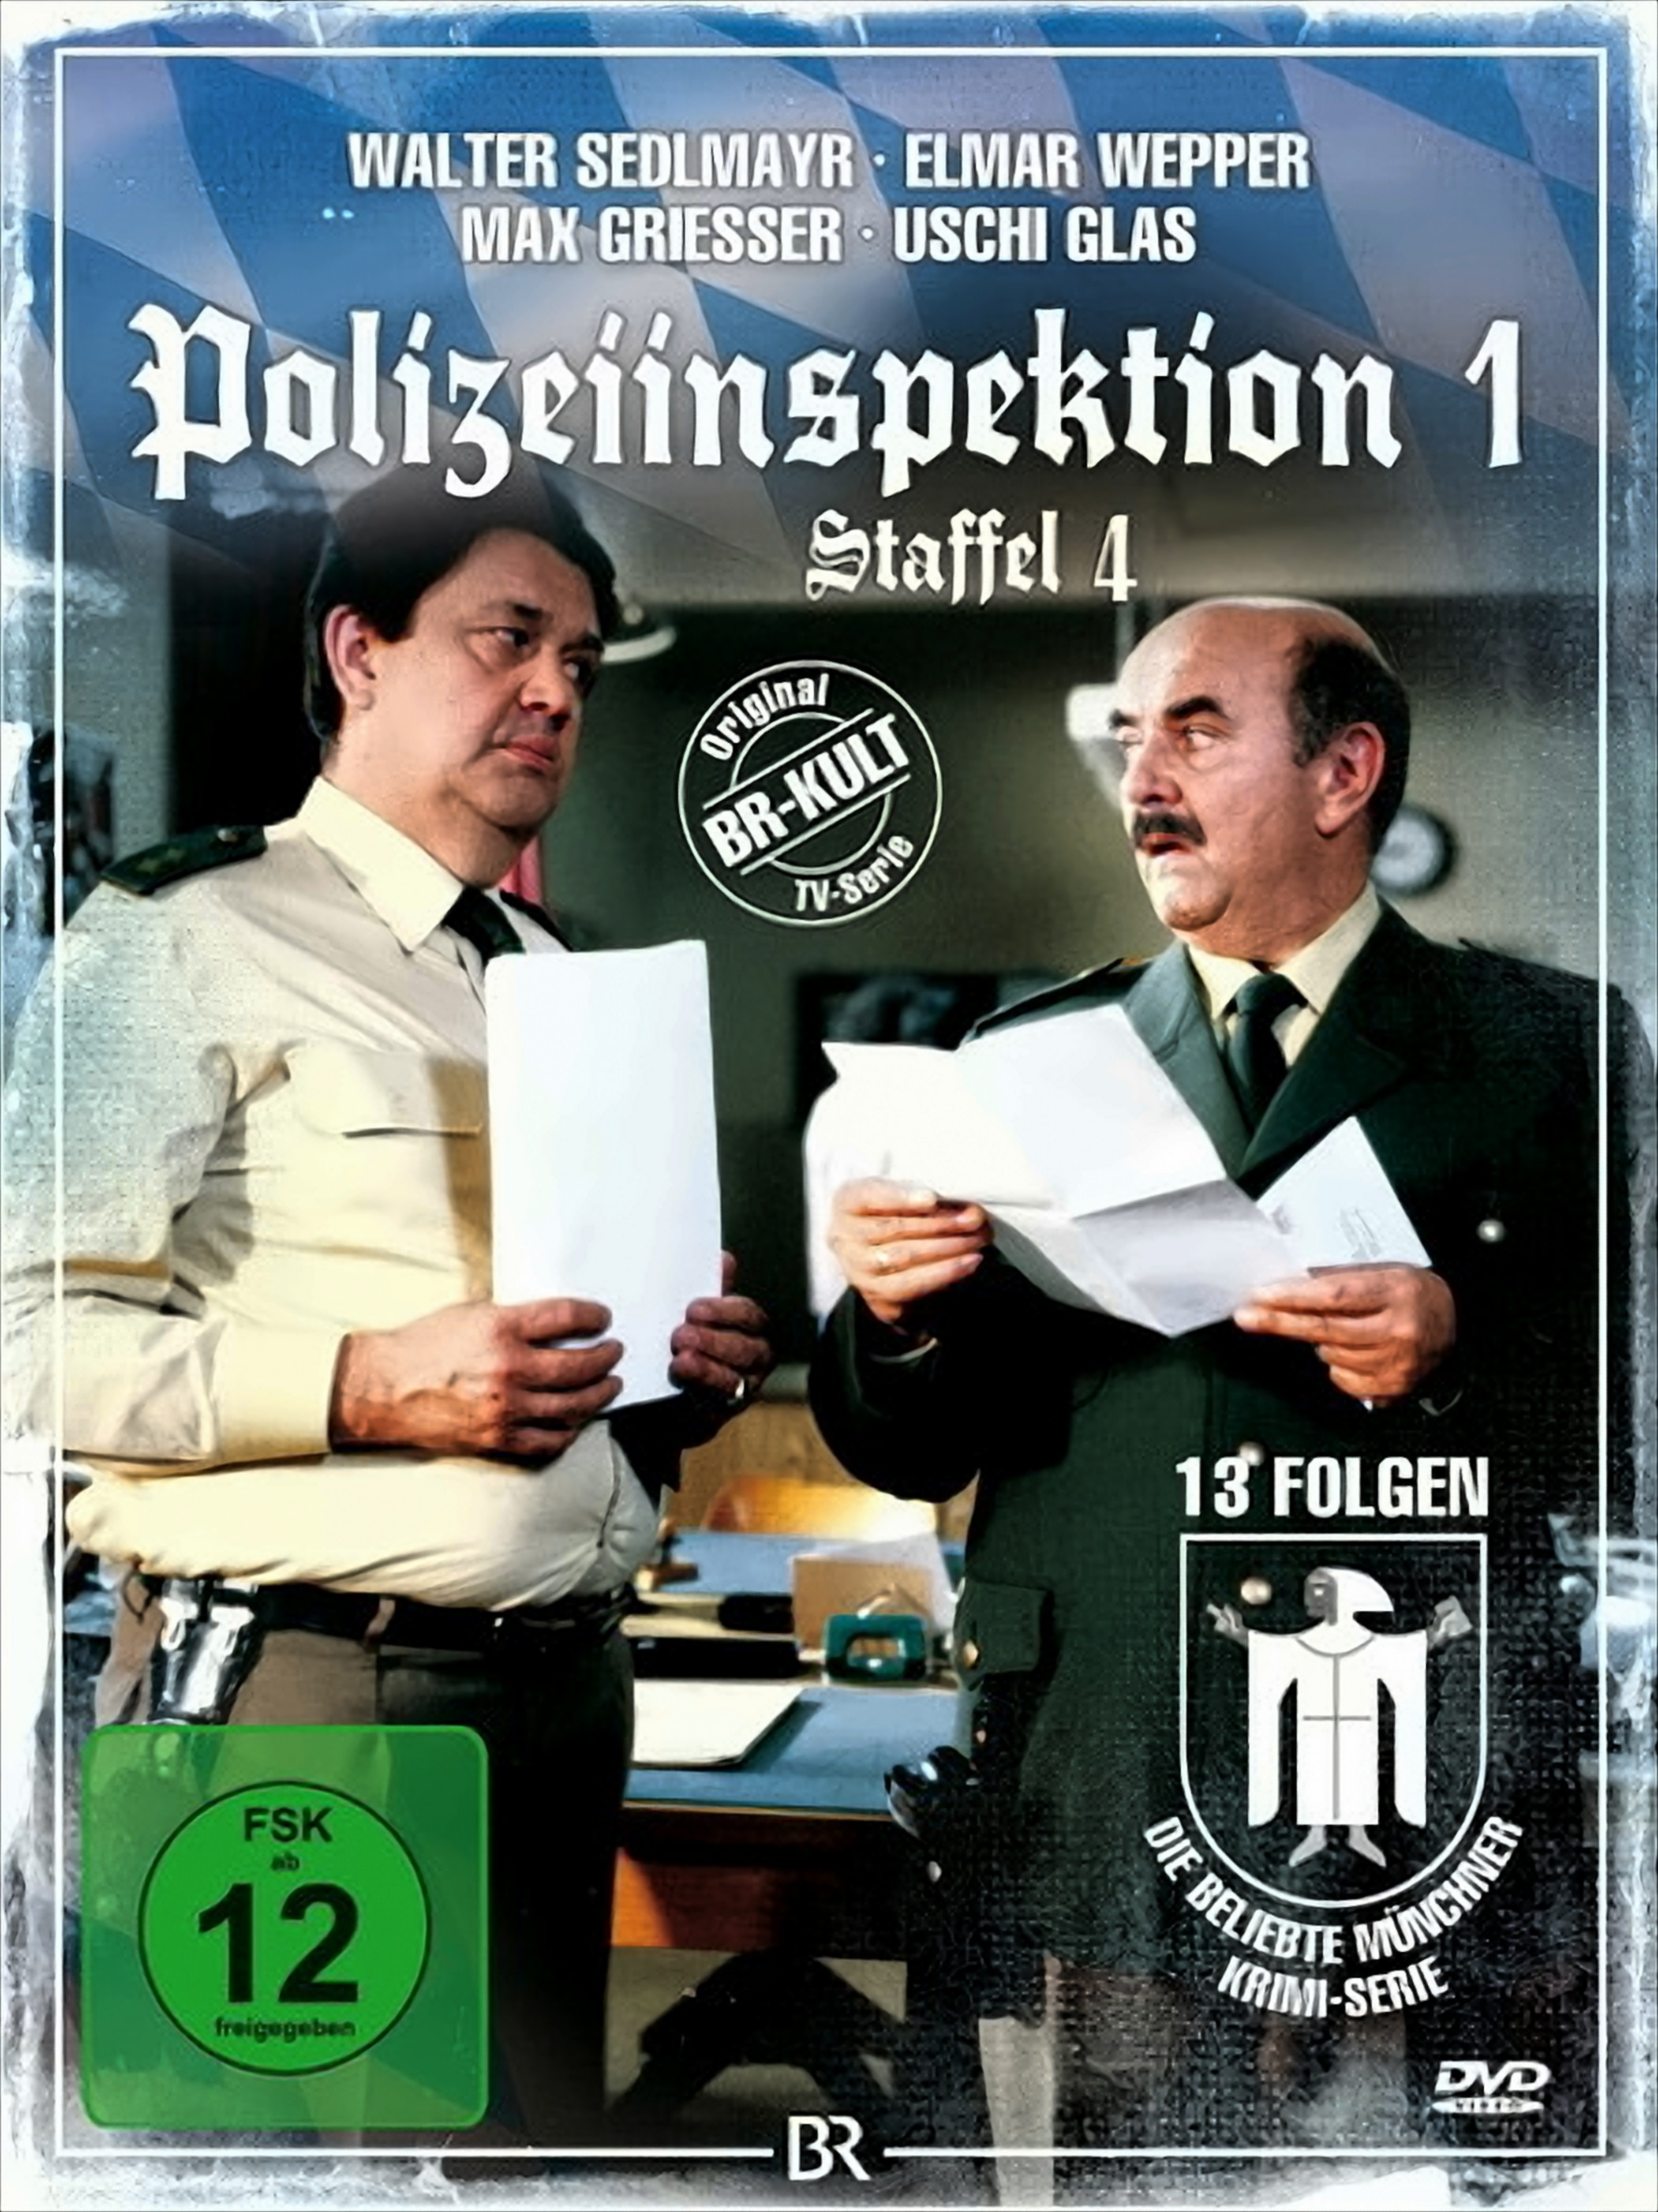 Polizeiinspektion 1 - Staffel DVD 04